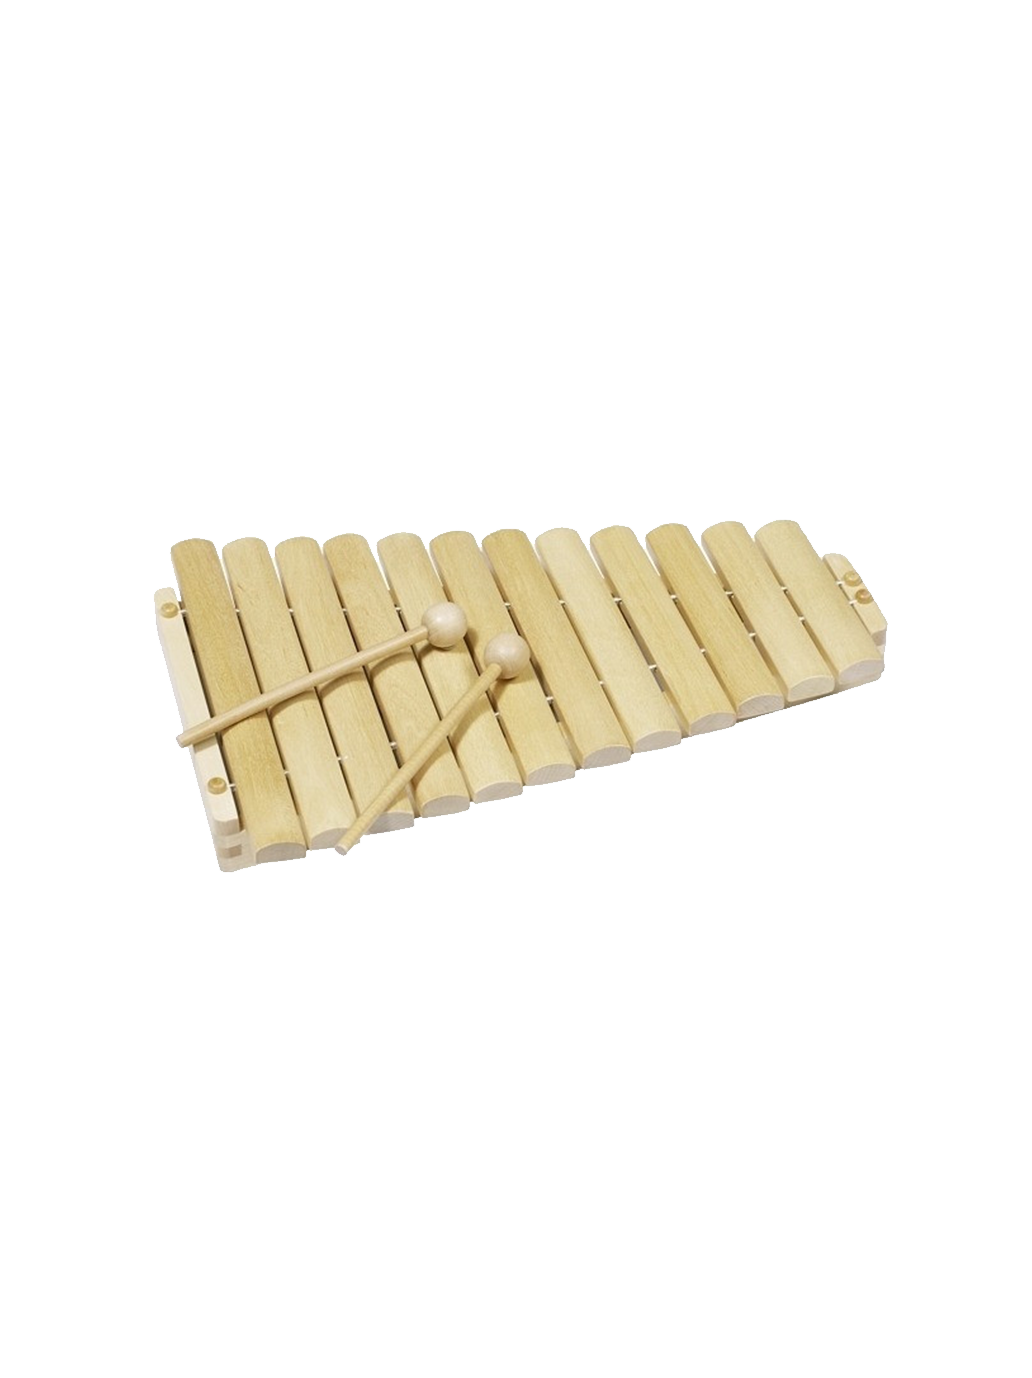 xylophone en bois 12 tons